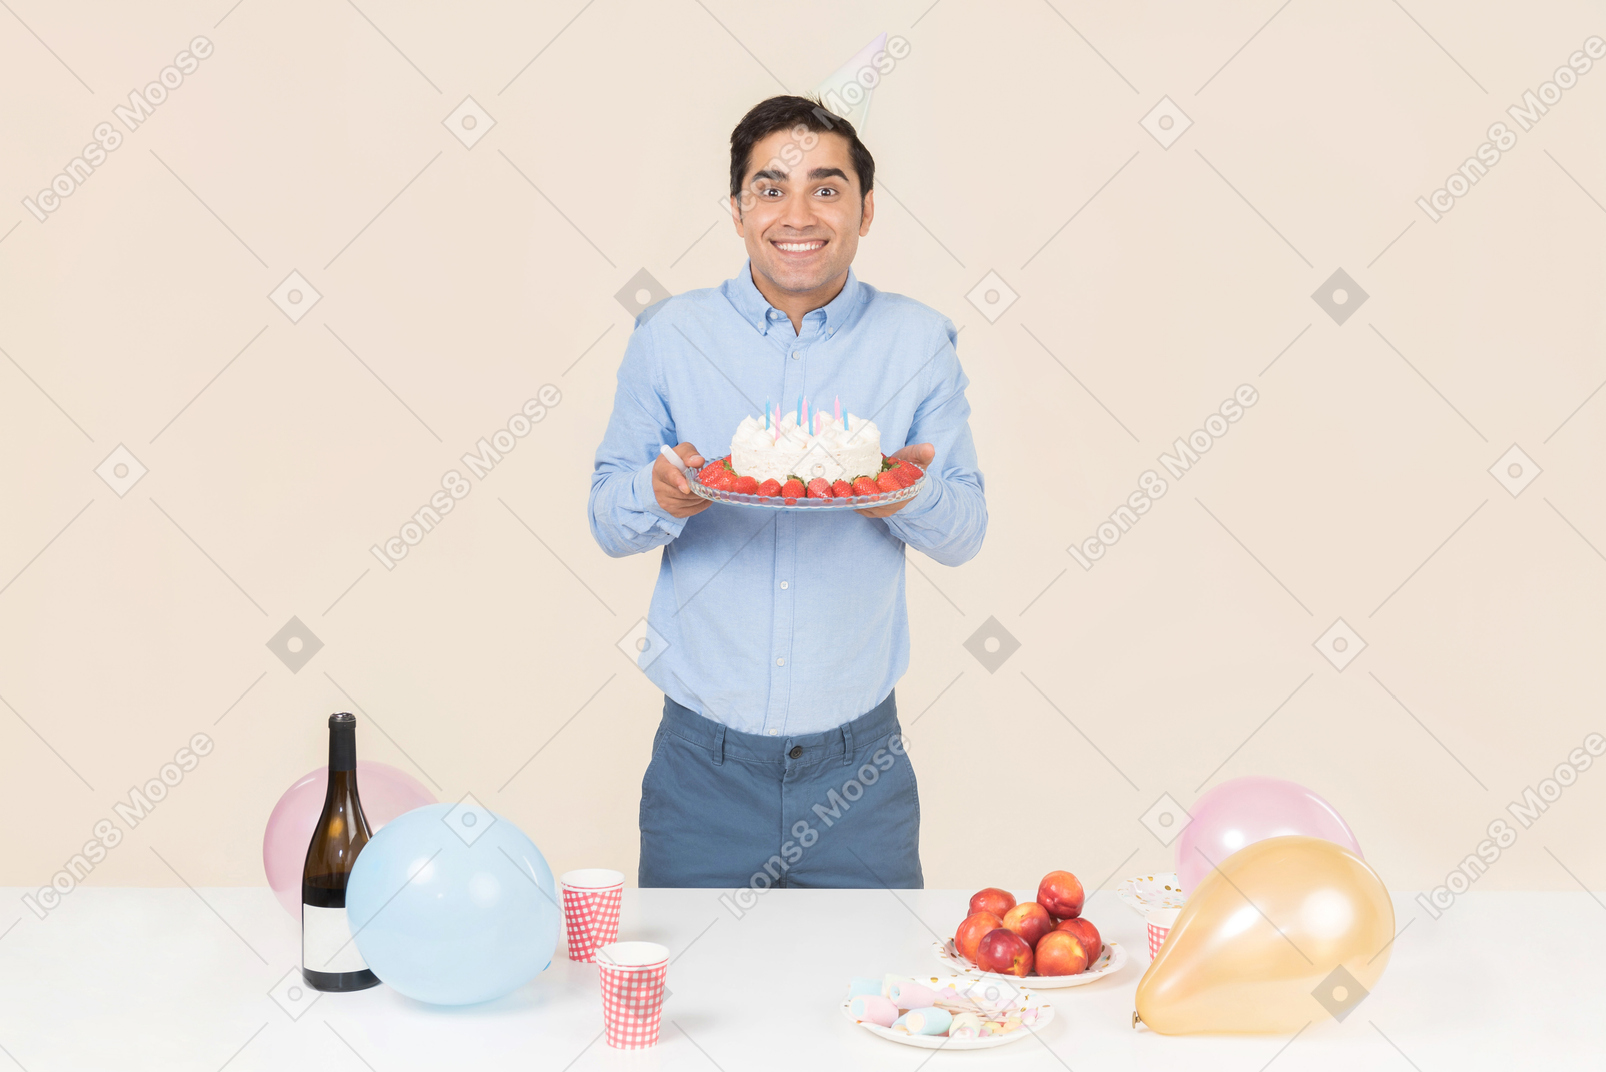 Celebrating birthday with an amazing cake